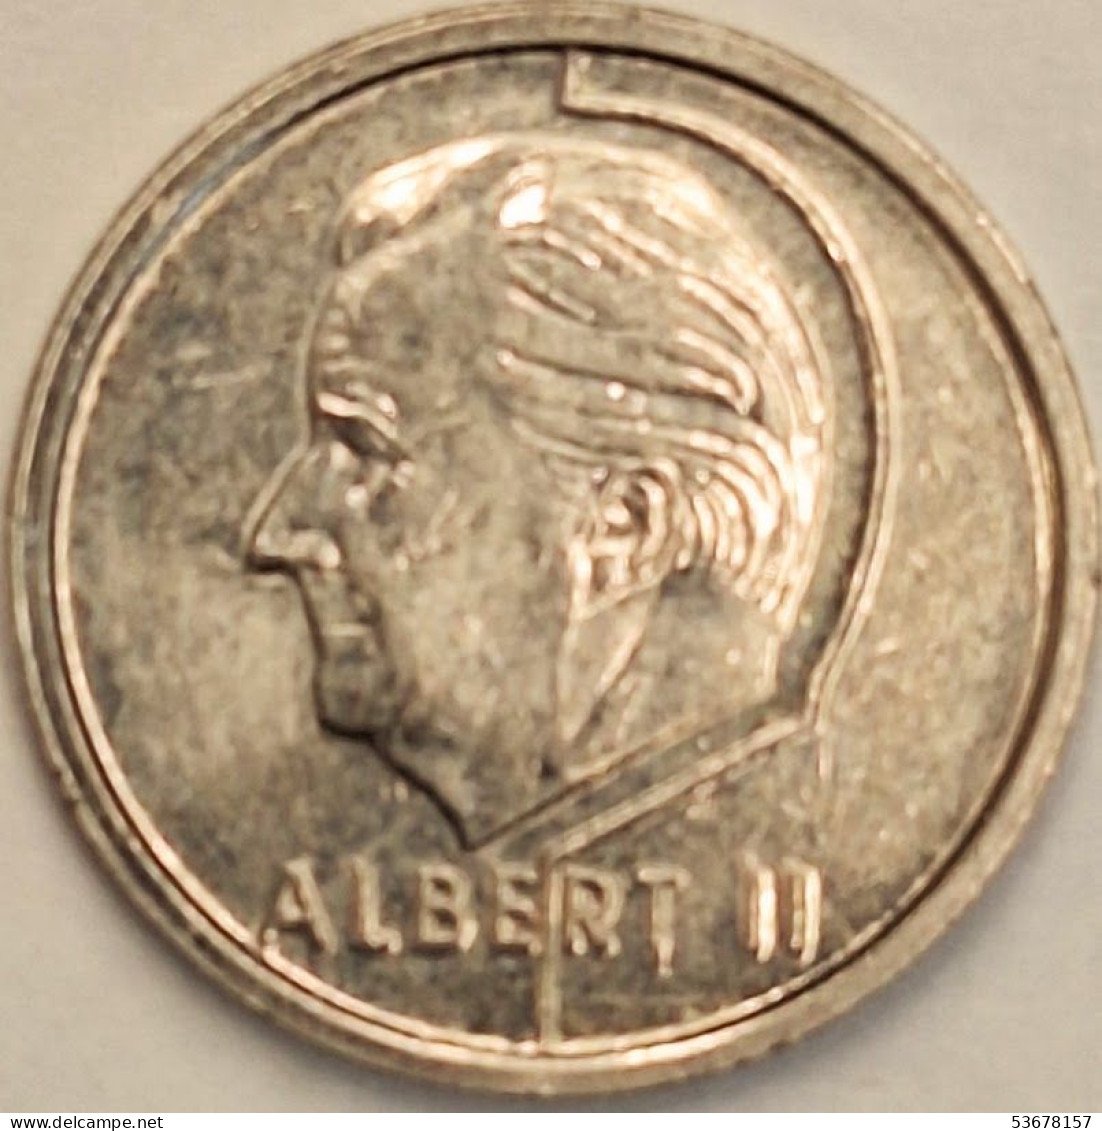 Belgium - Franc 1996, KM# 188 (#3151) - 1 Franc